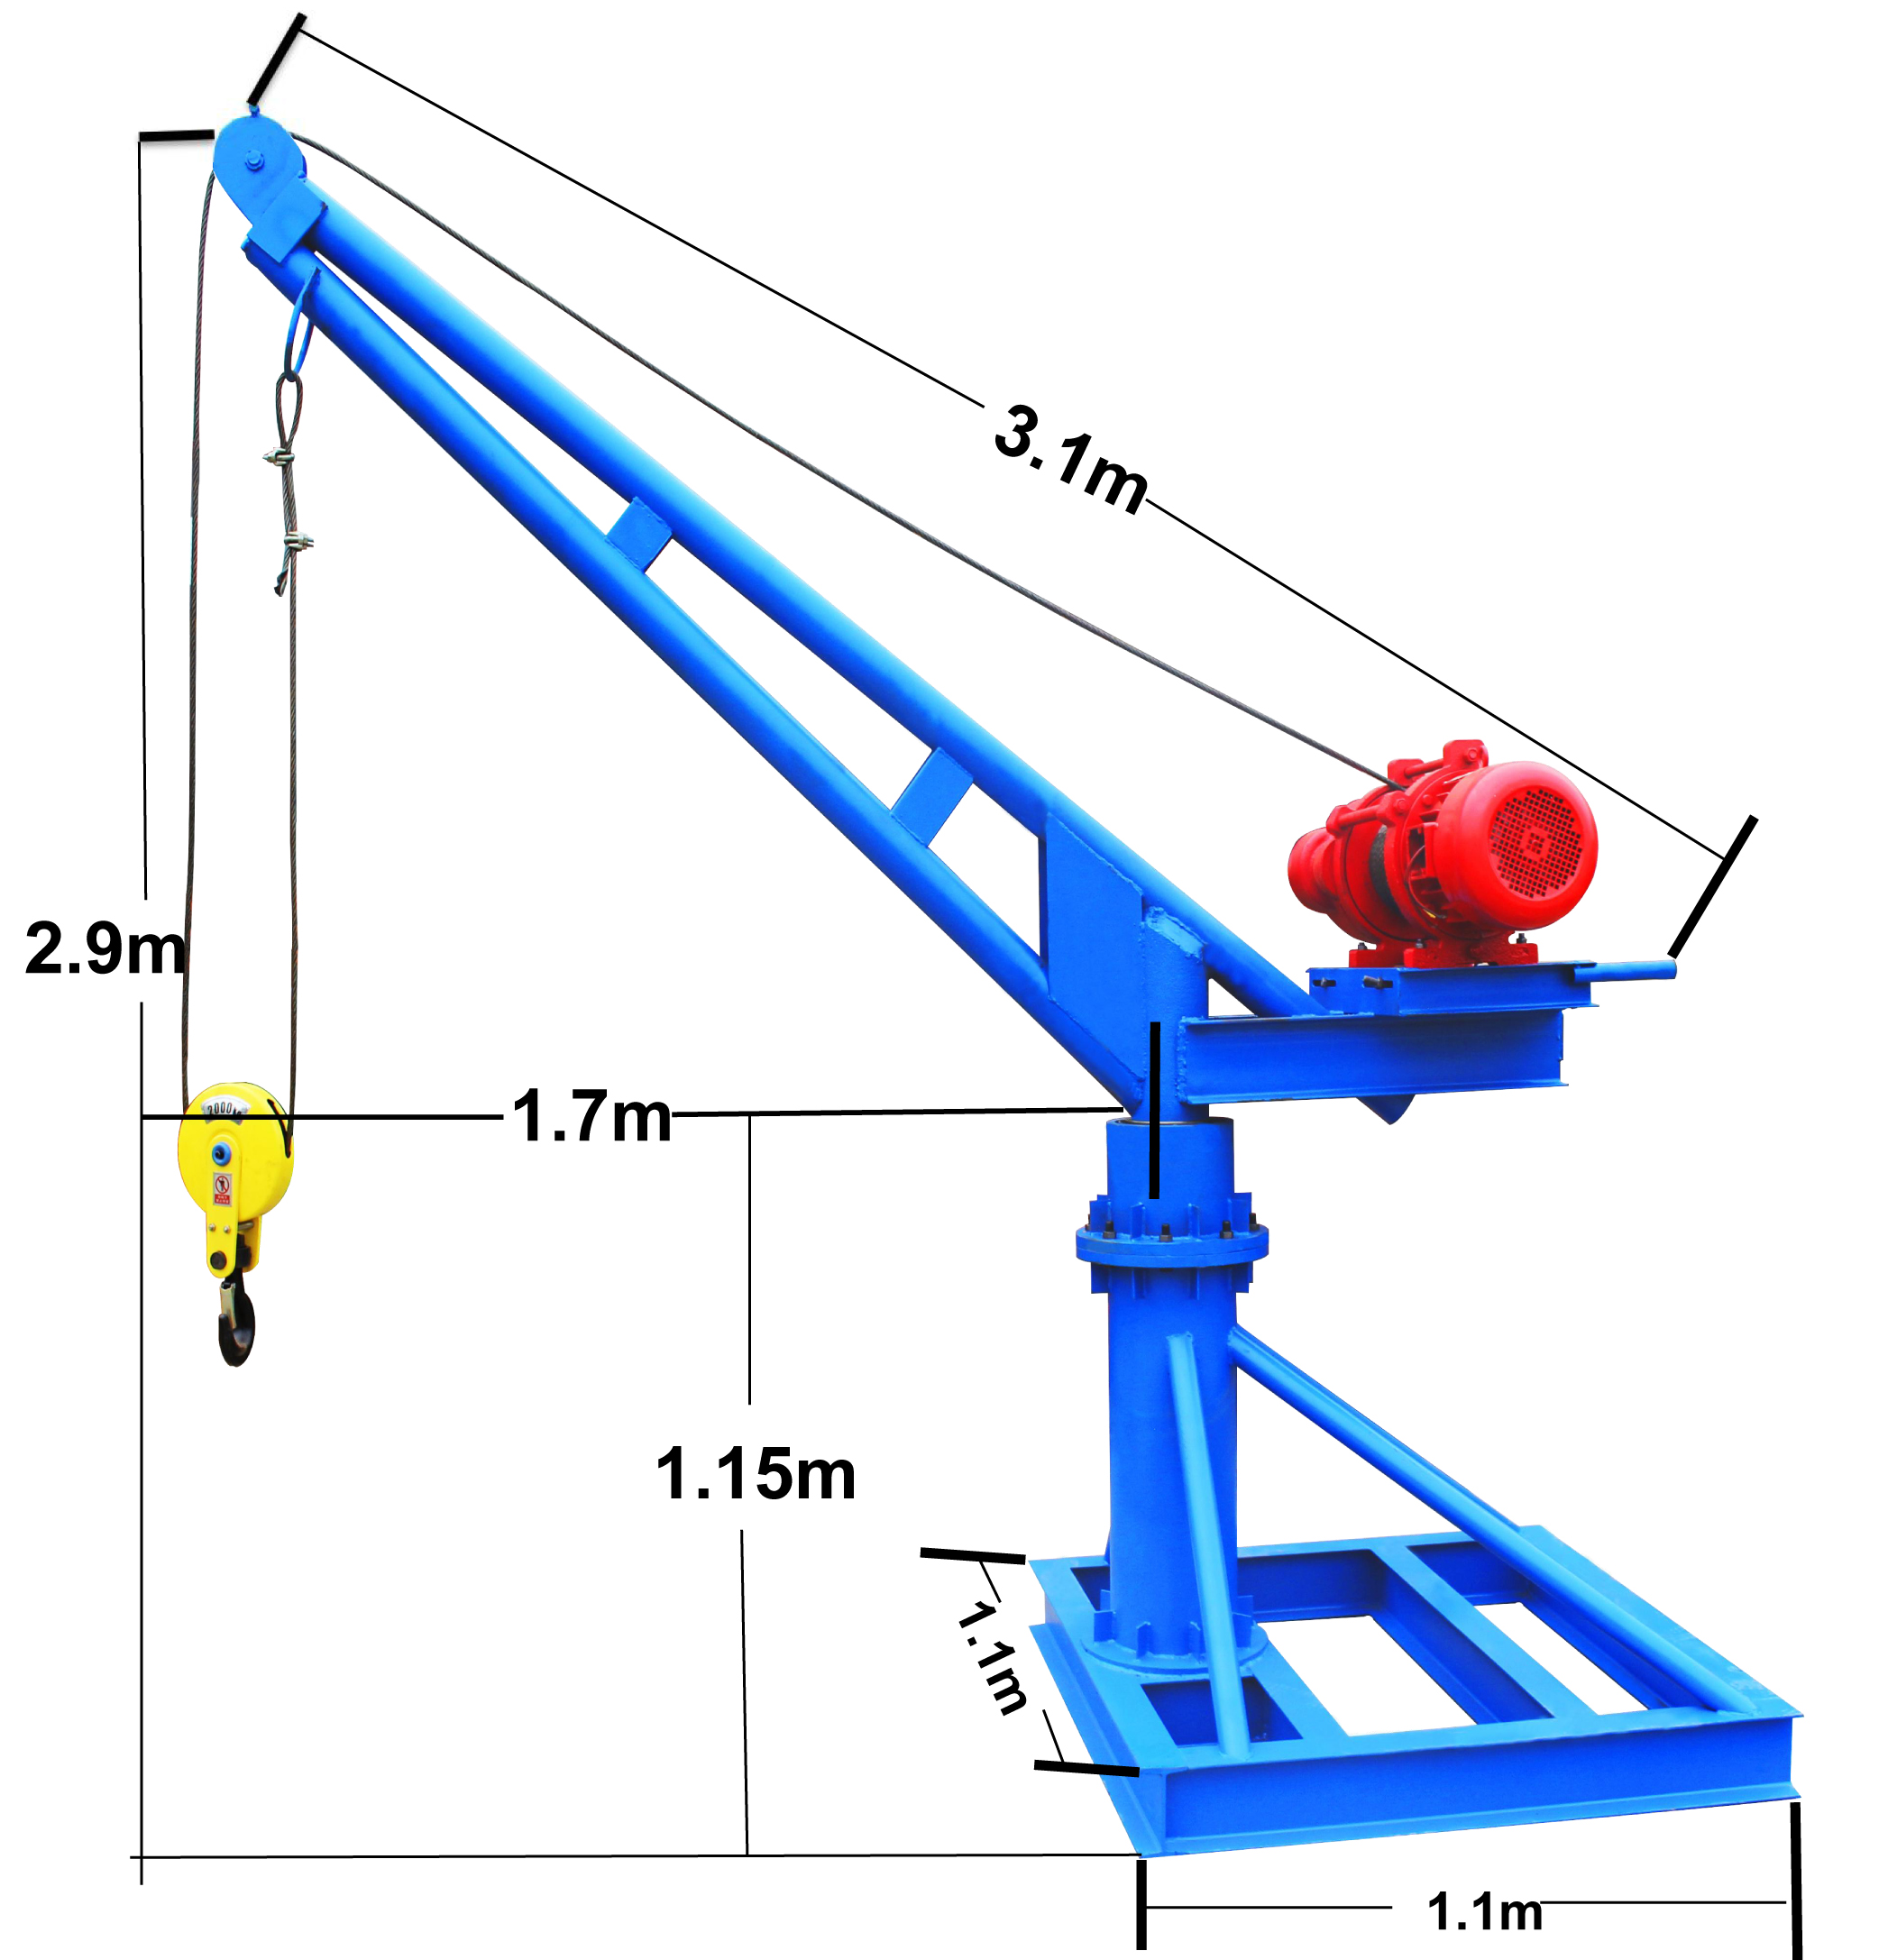 Lifting building material mini crane test load video